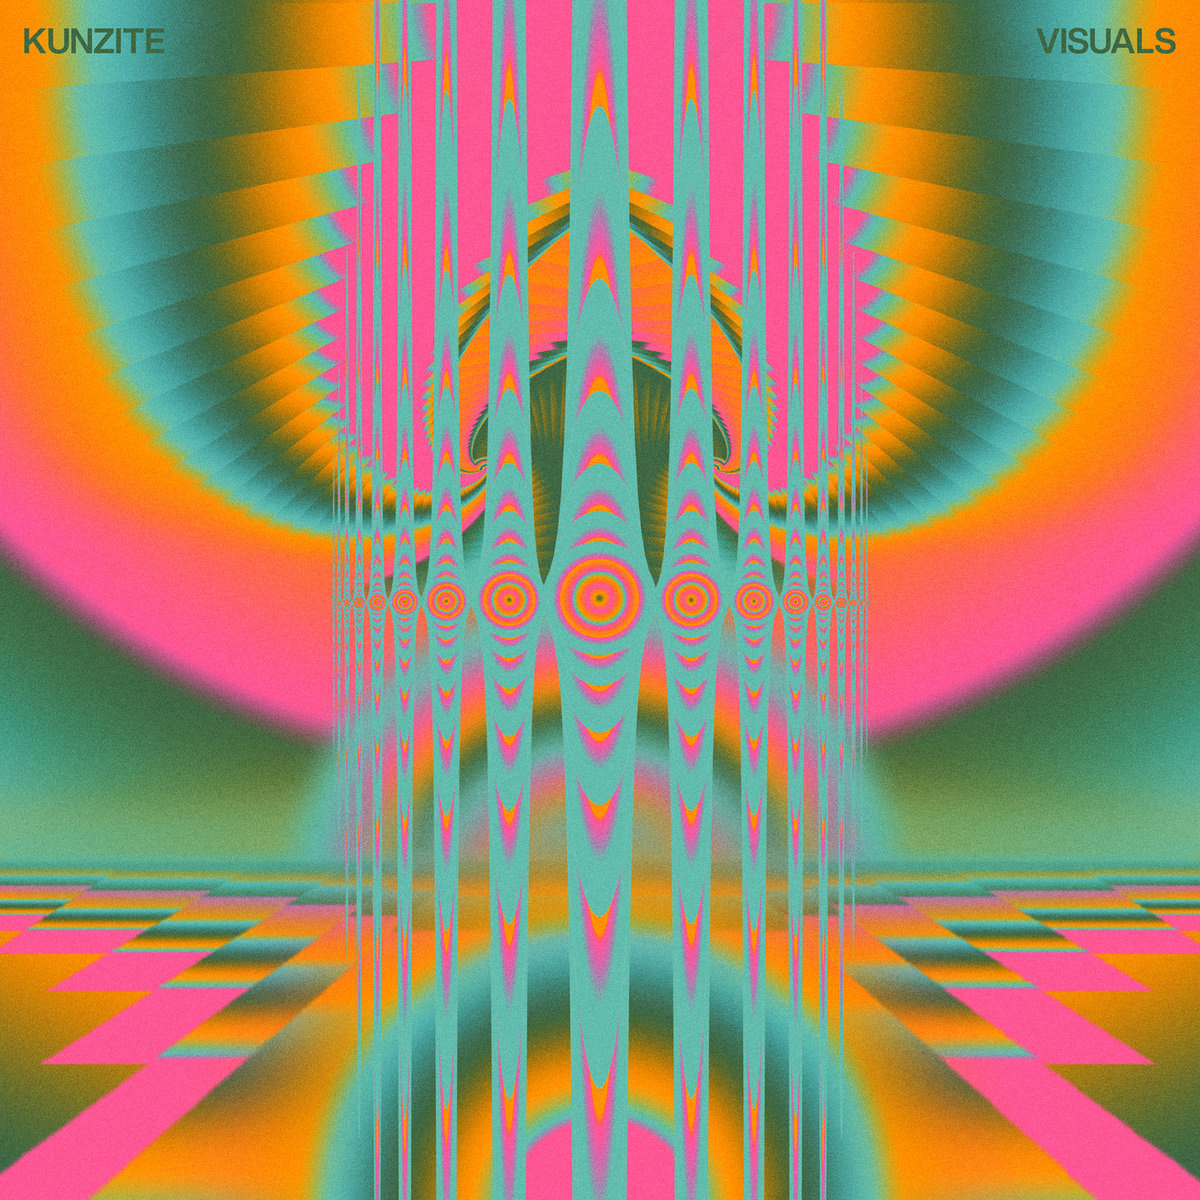 Kunzite - Visuals vinyl cover